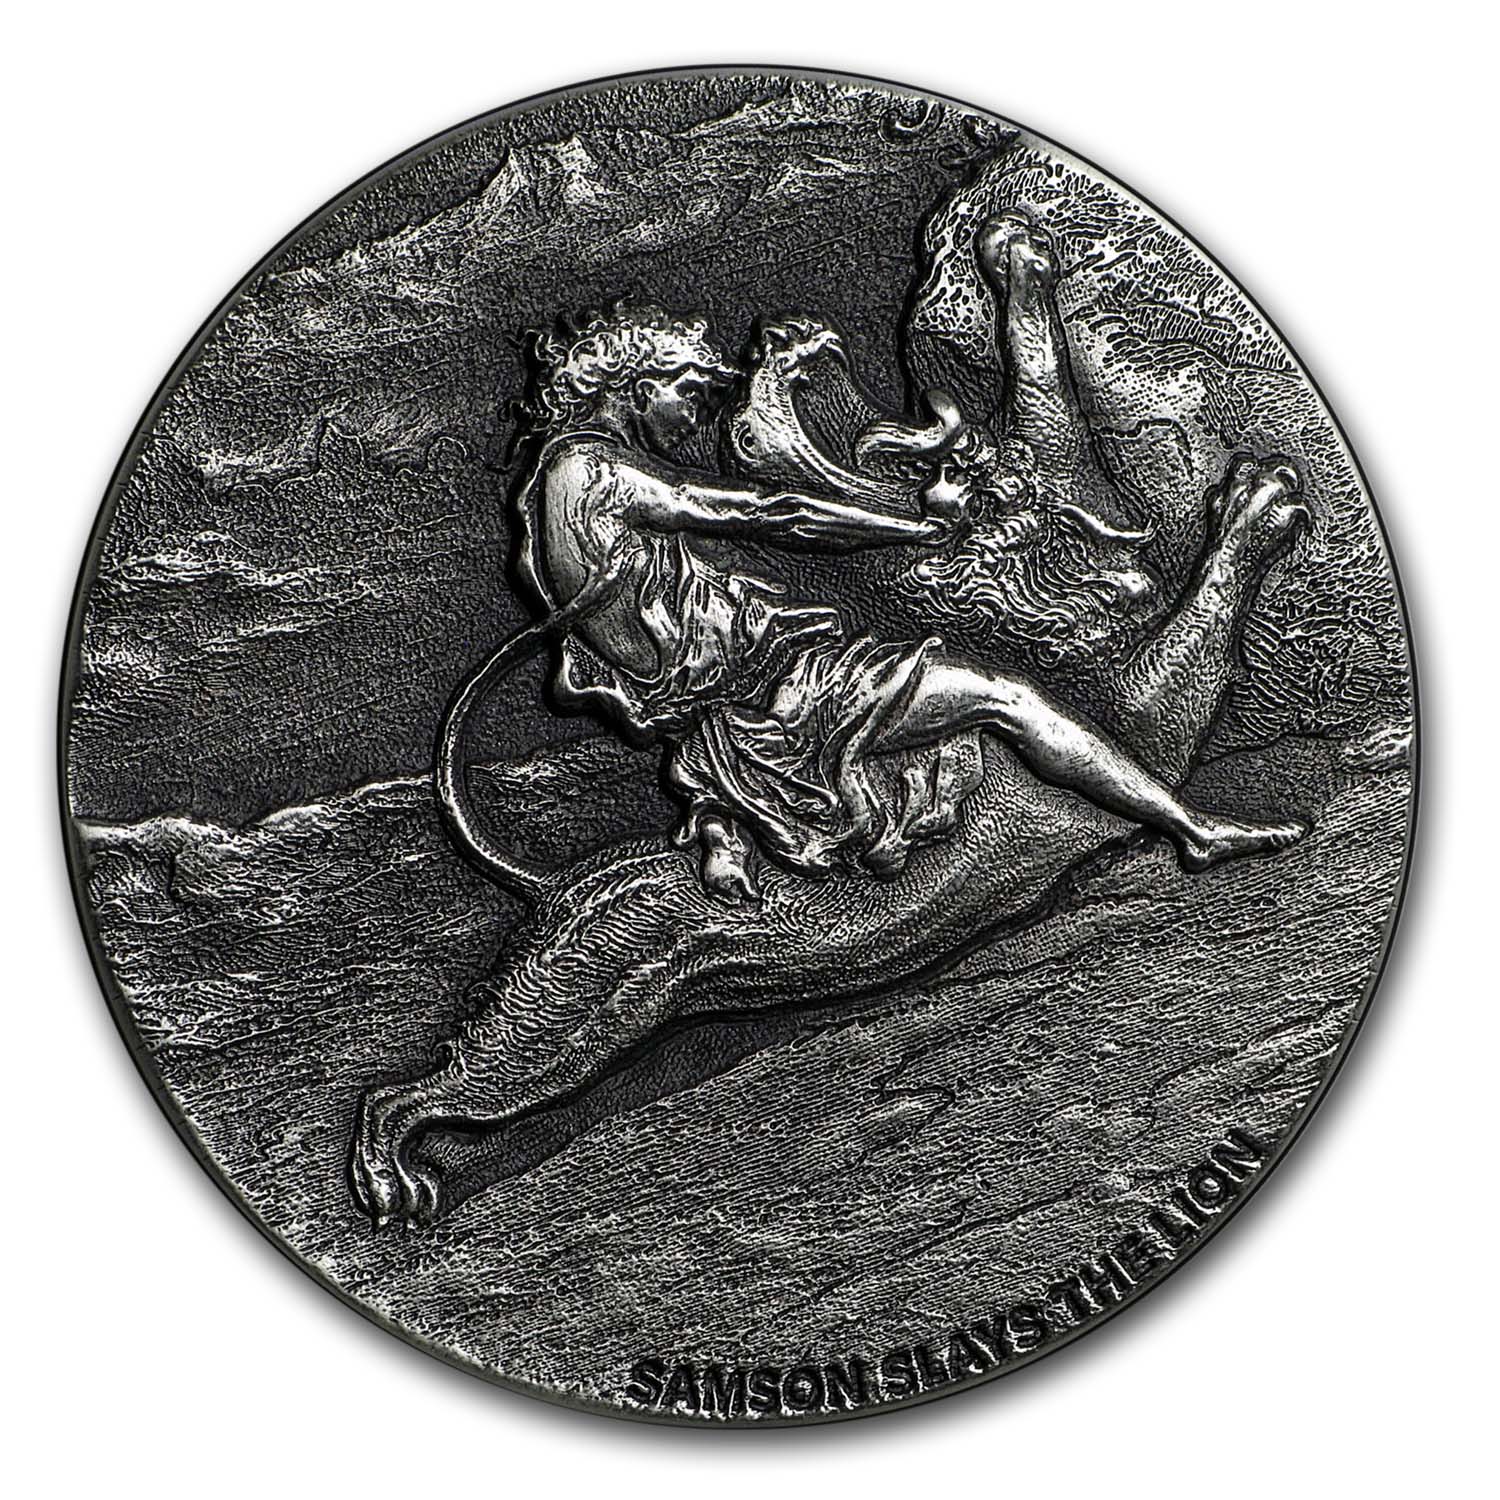 Buy 2019 2 oz Silver Coin - Biblical Series (Samson Slays the Lion)